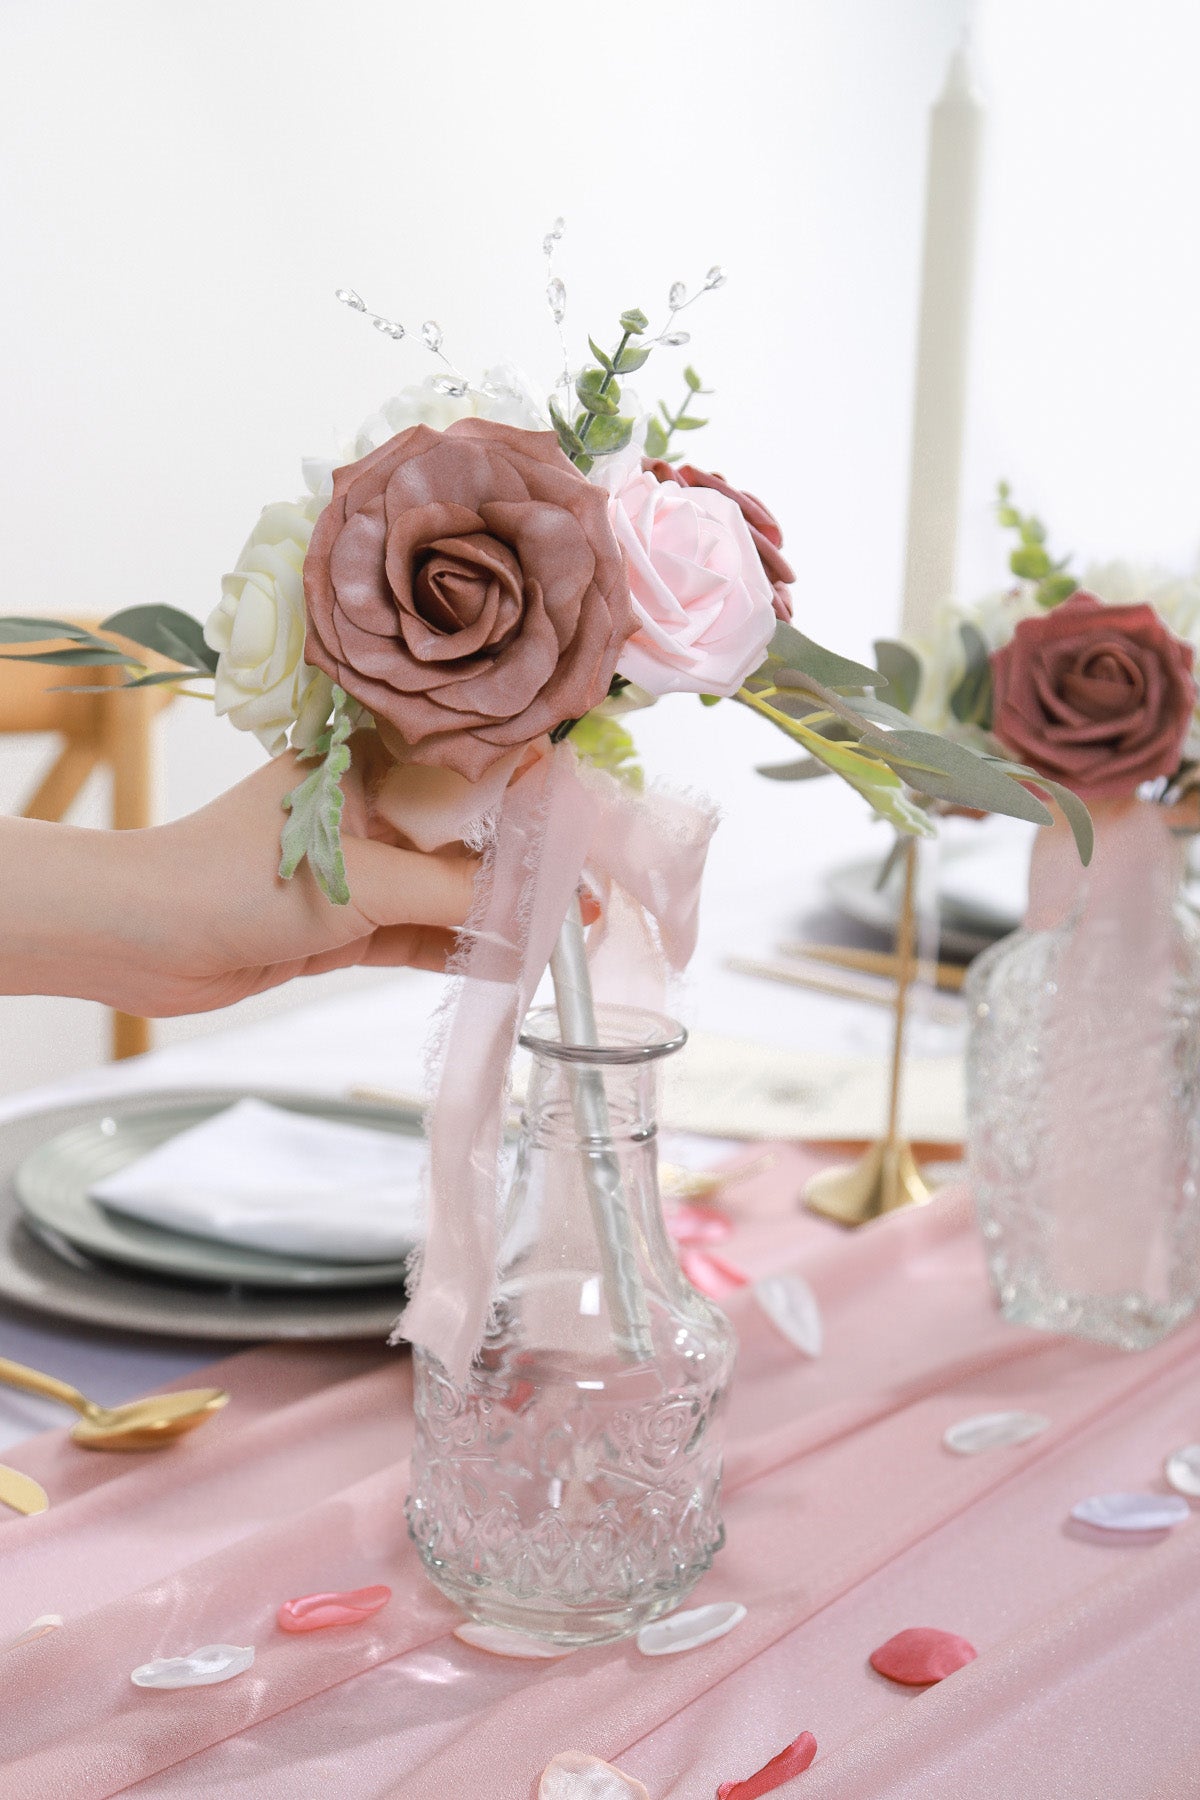 8''/10'' Bridesmaid Bouquets, Set of 4, Wedding Centerpieces - Dusty Rose